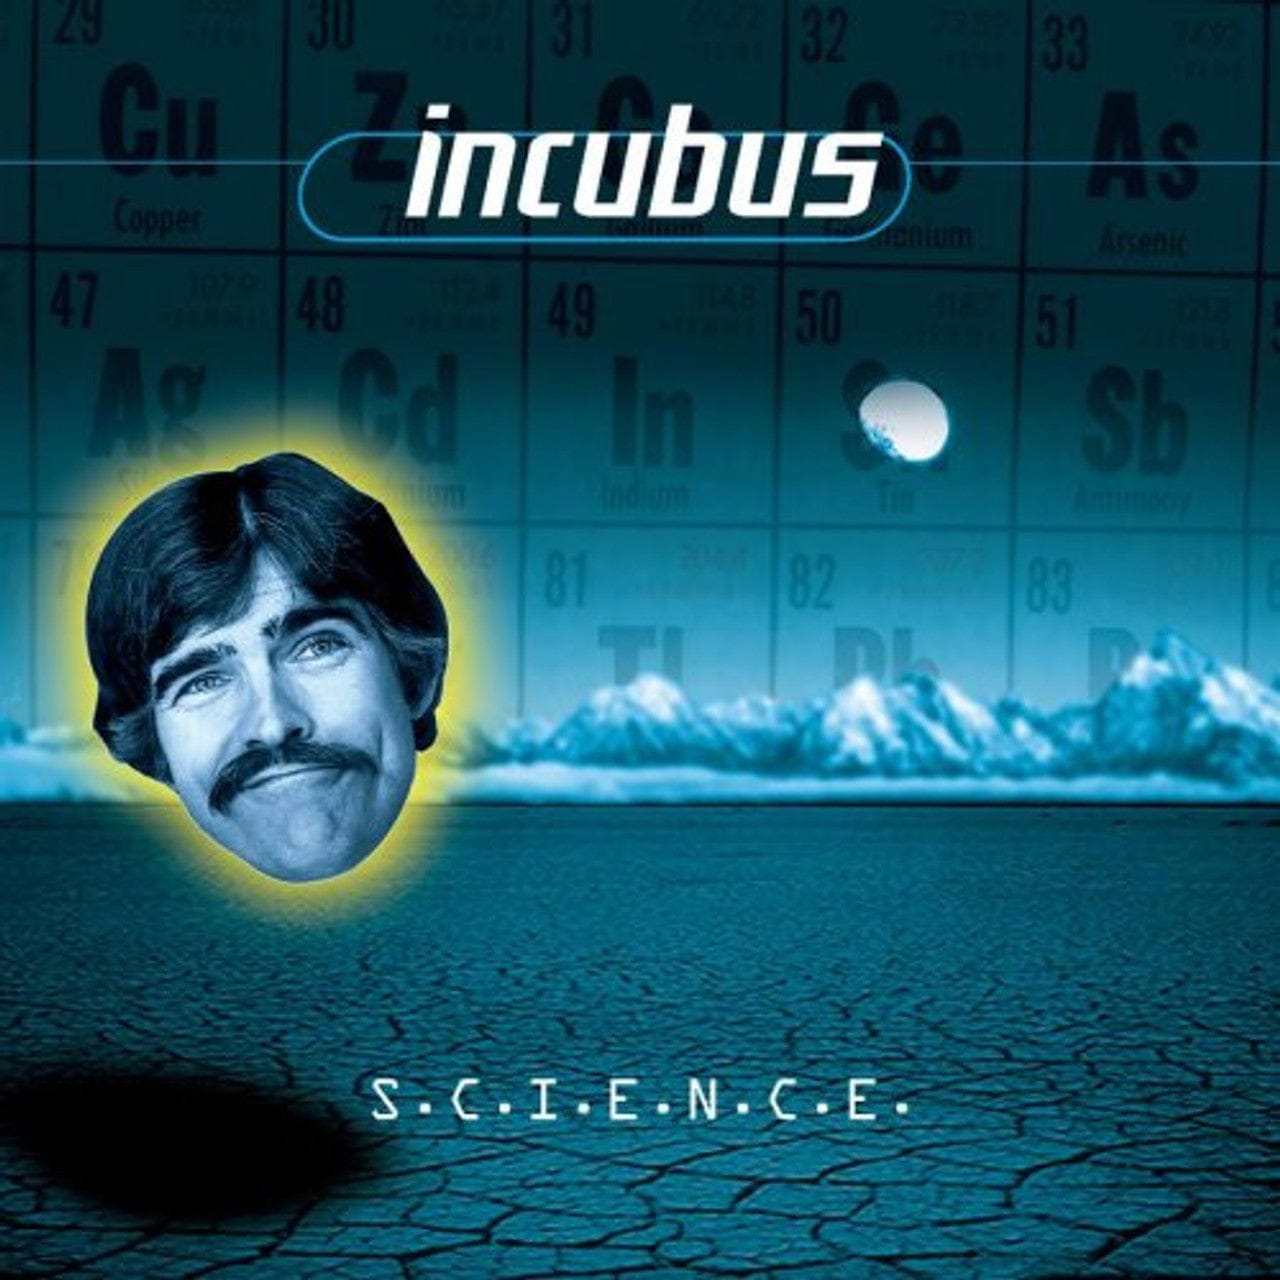 INCUBUS - Science Vinyl - JWrayRecords